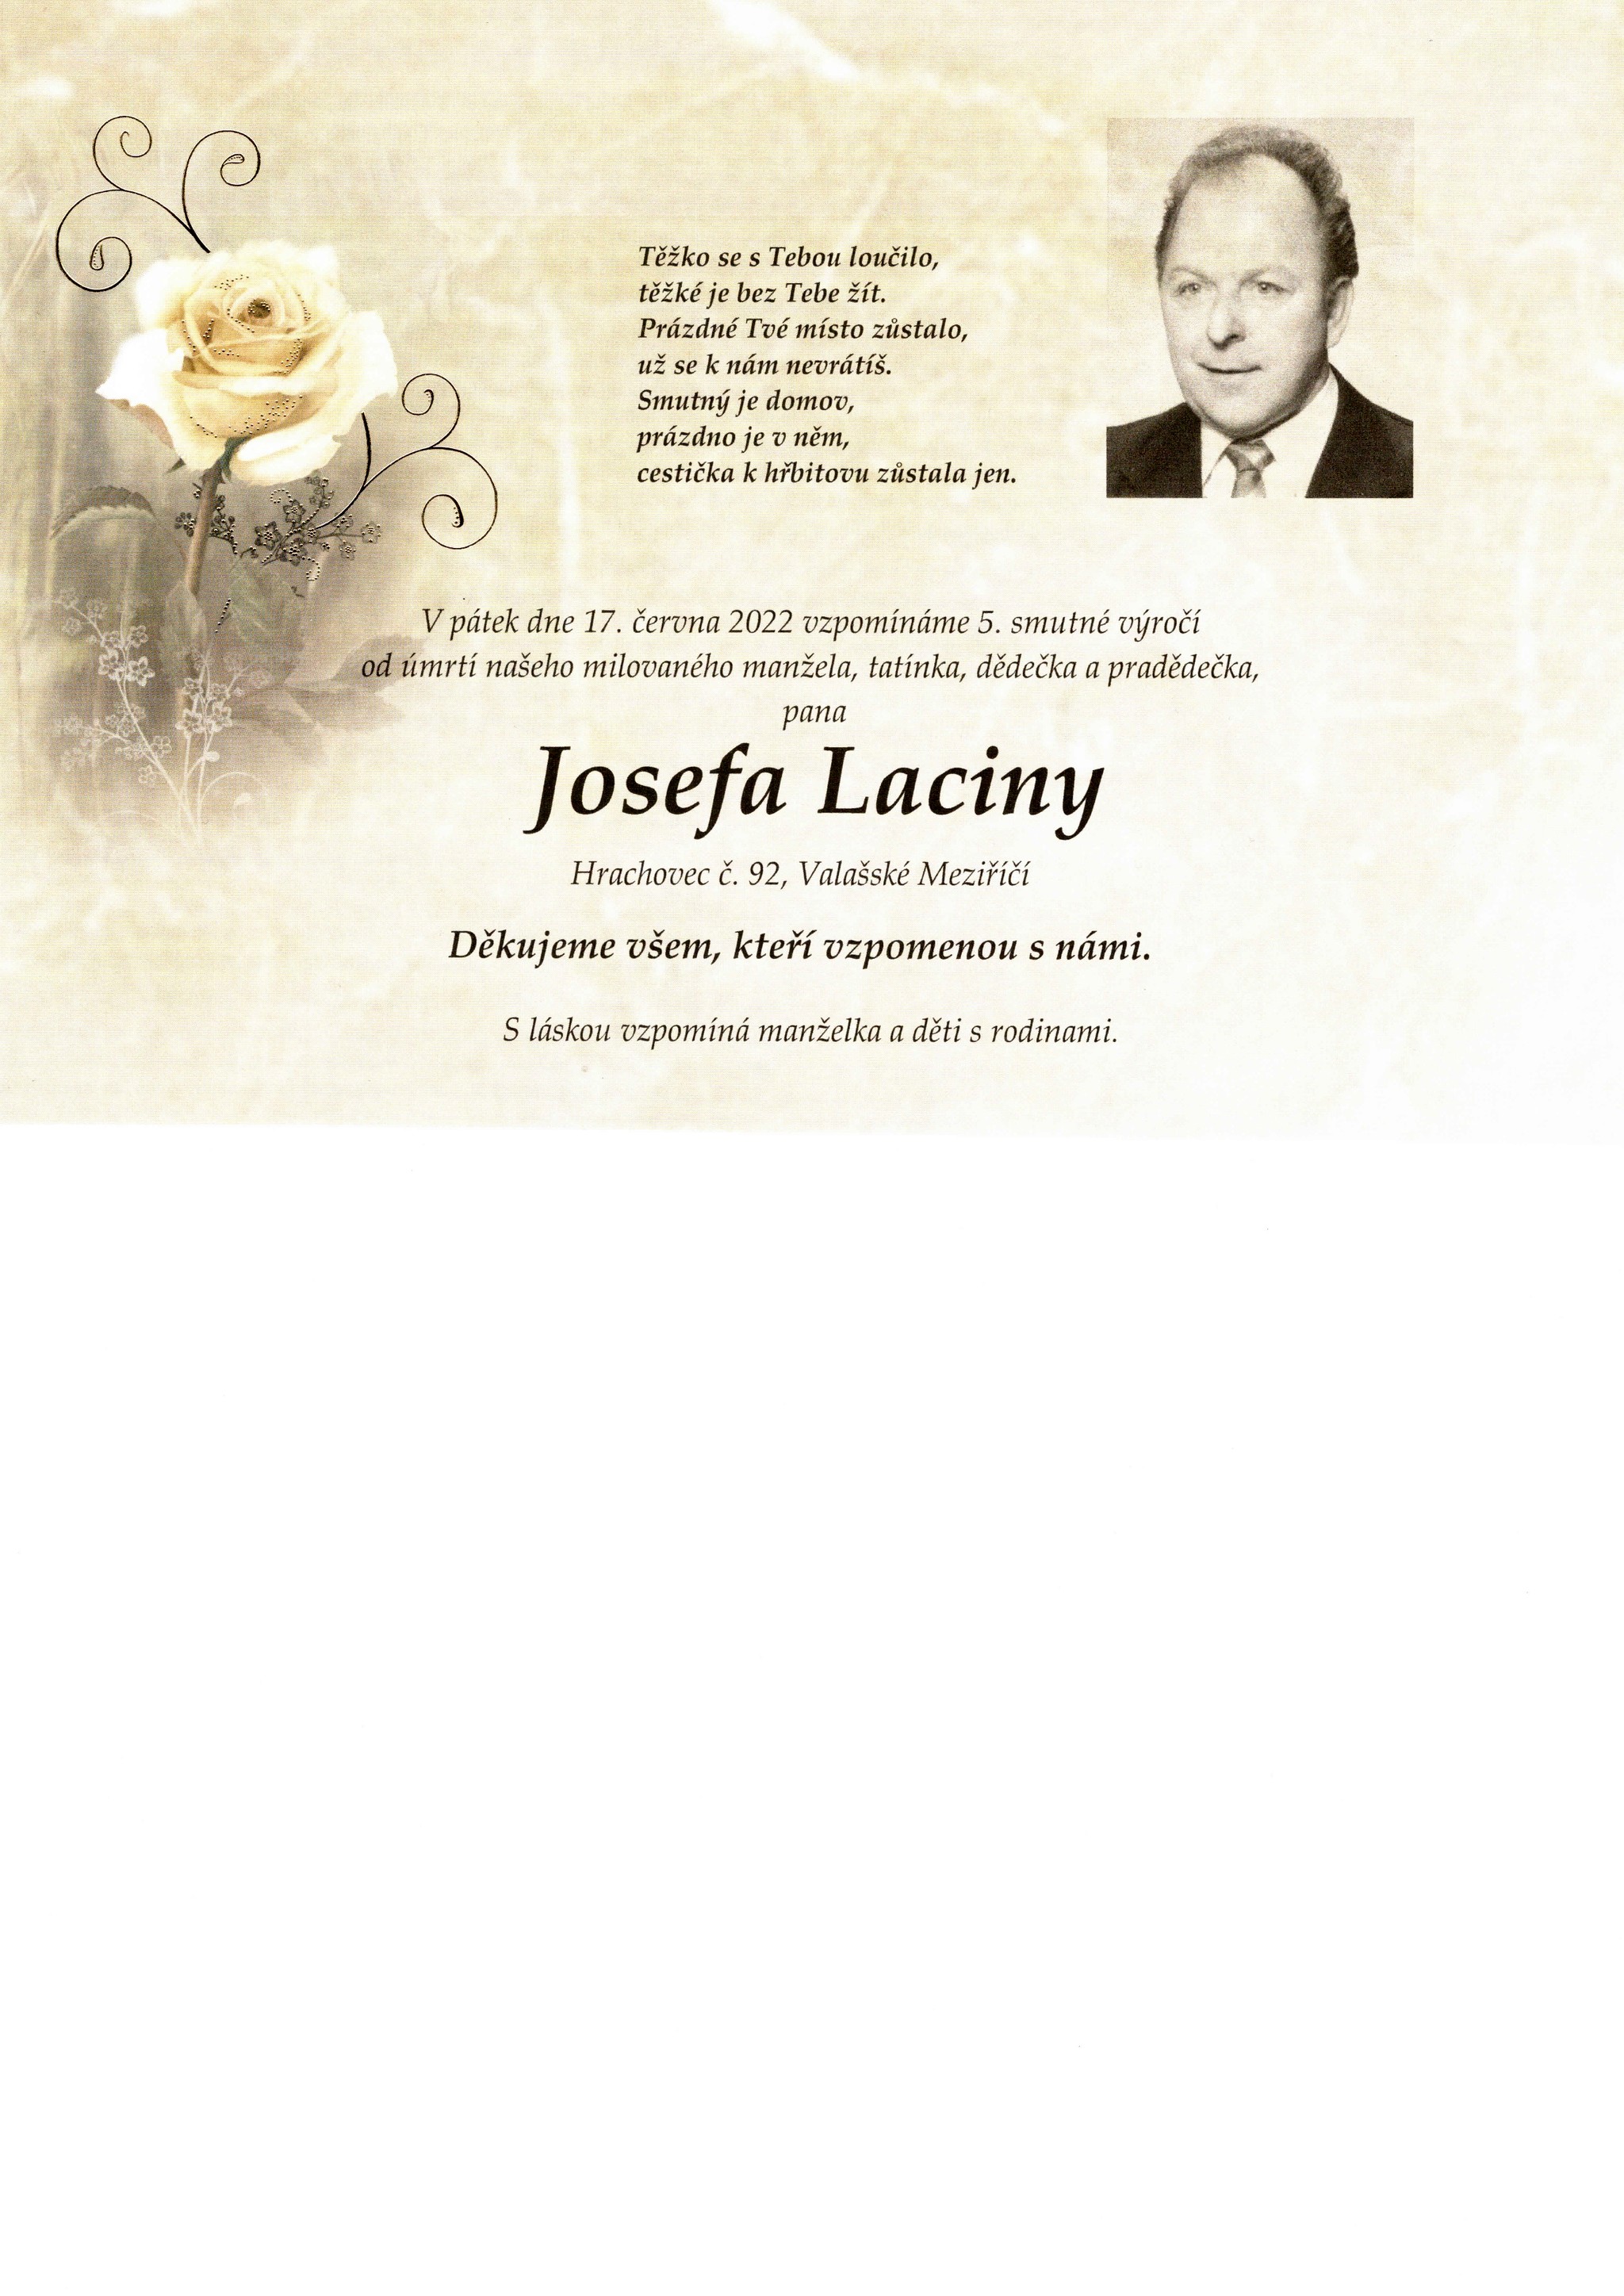 Josef Lacina